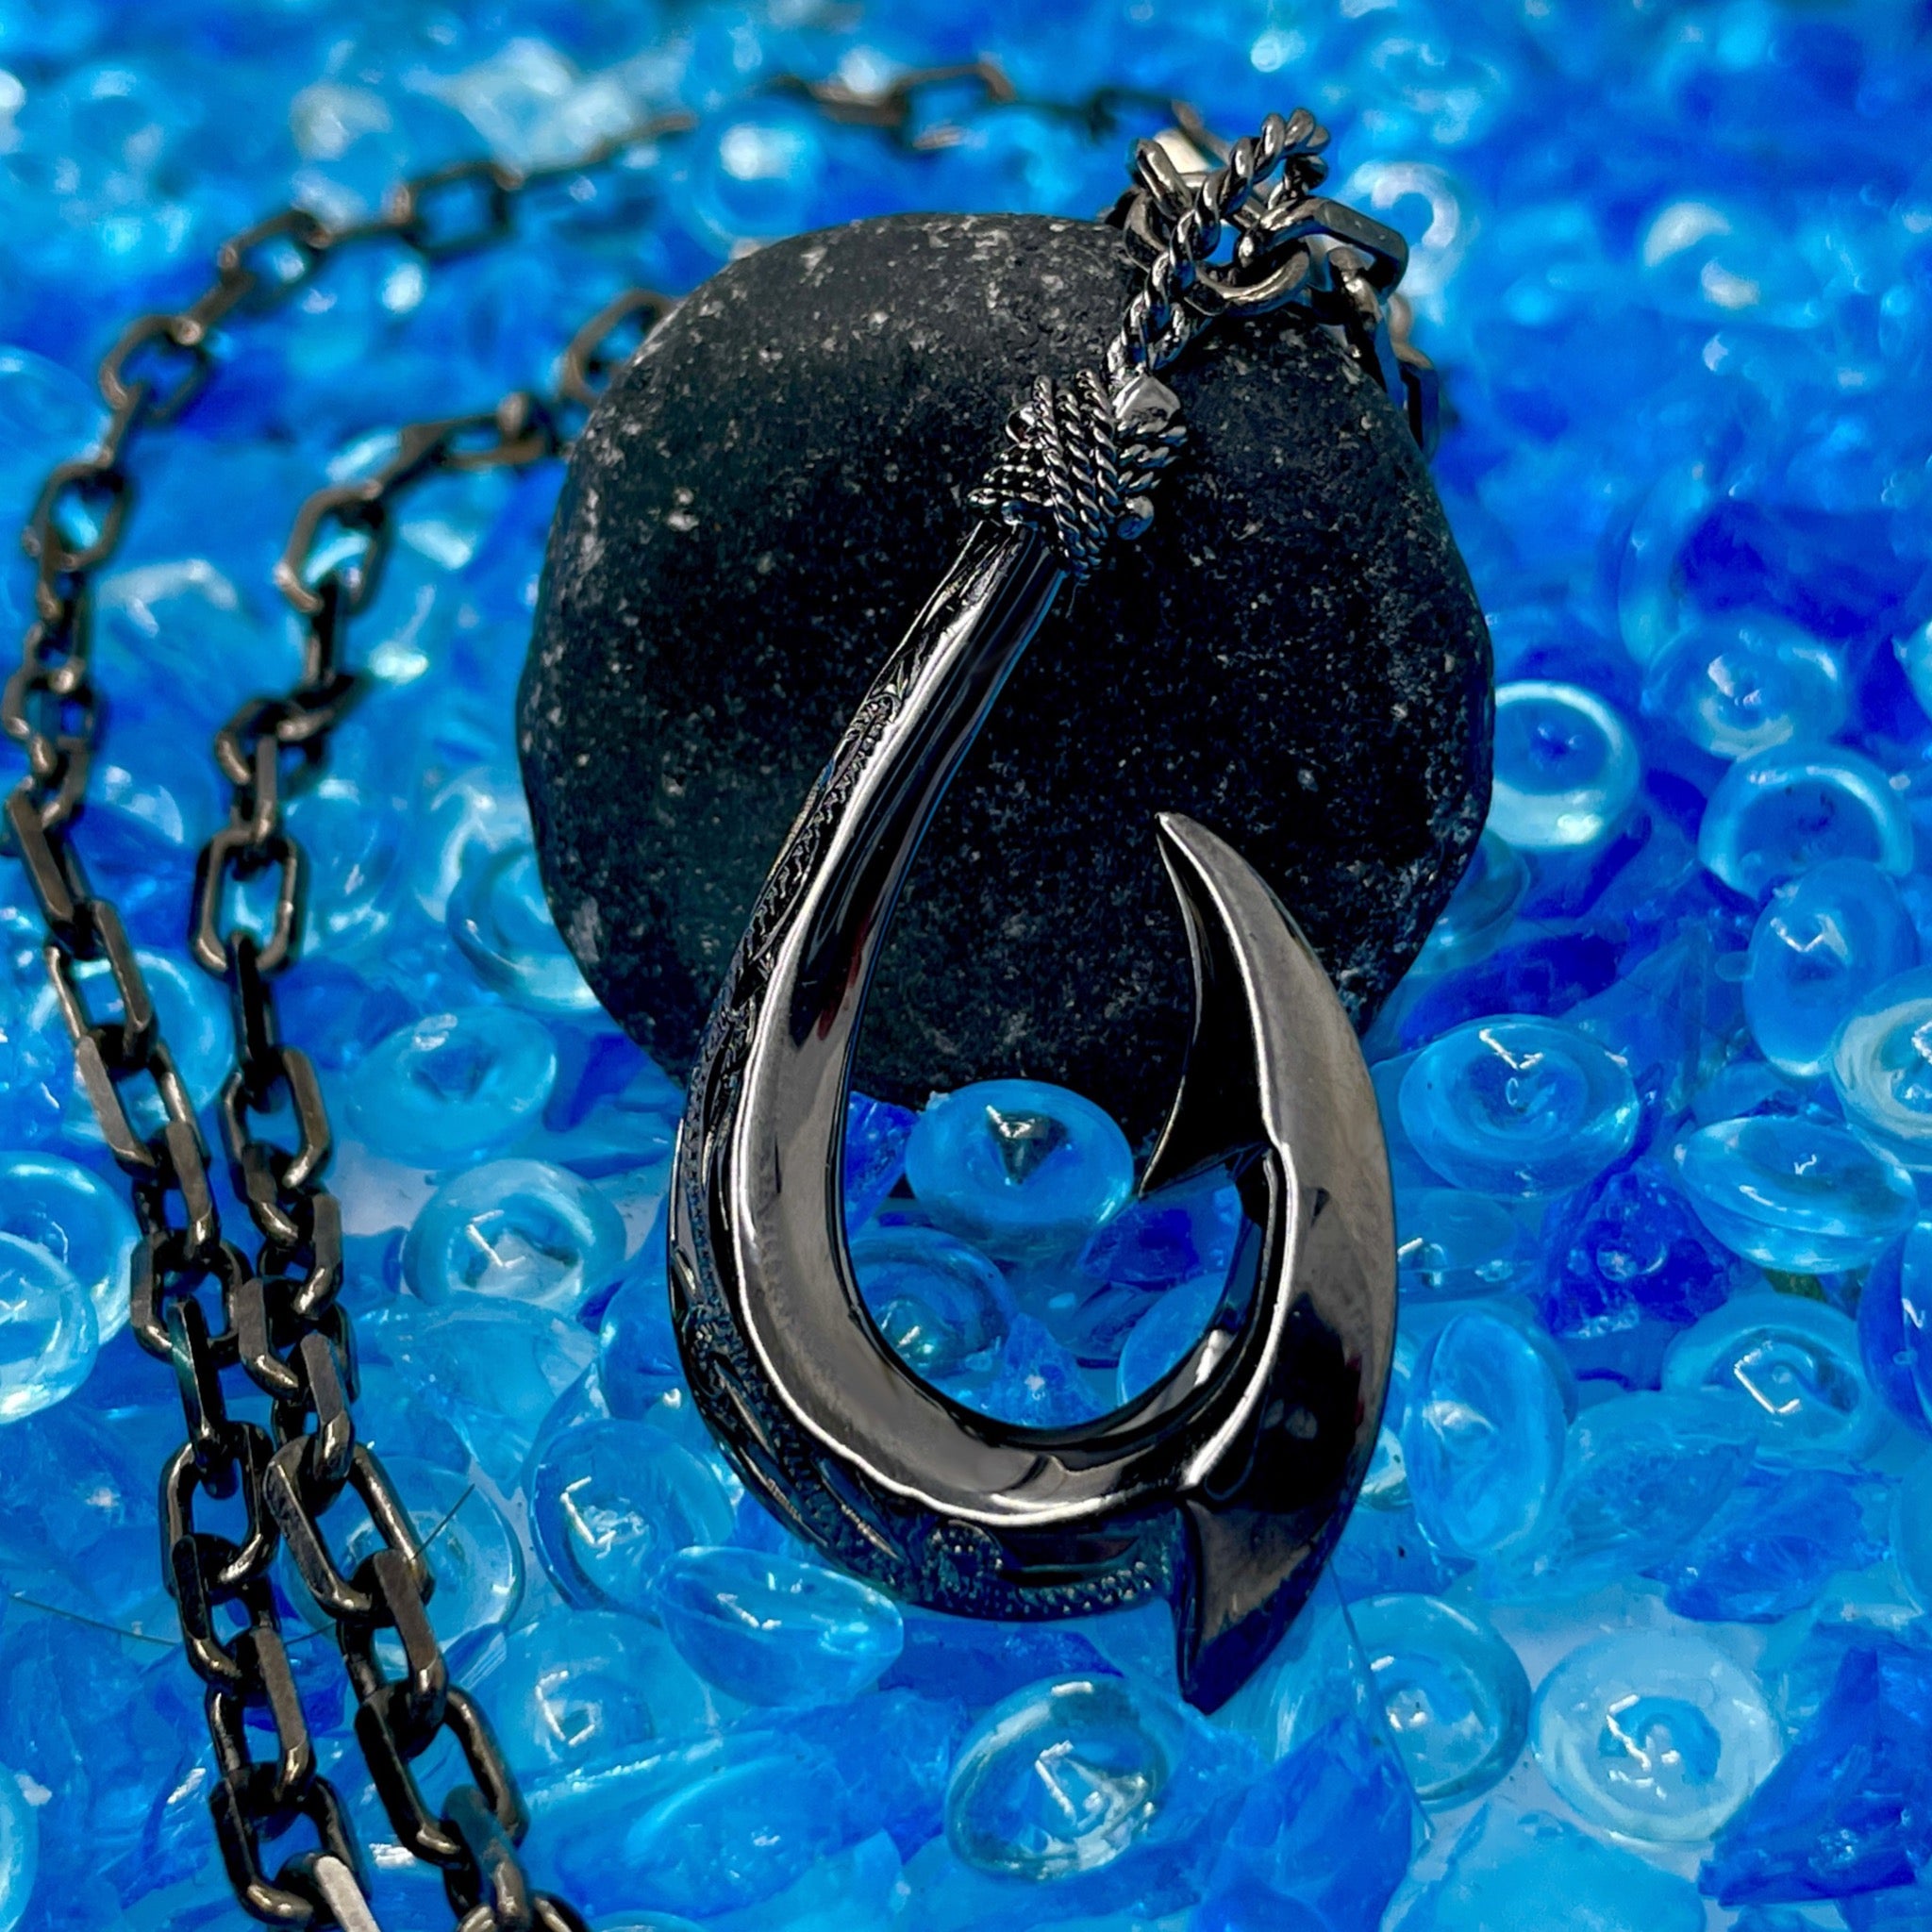  Hawaiian Fish Hook Necklace